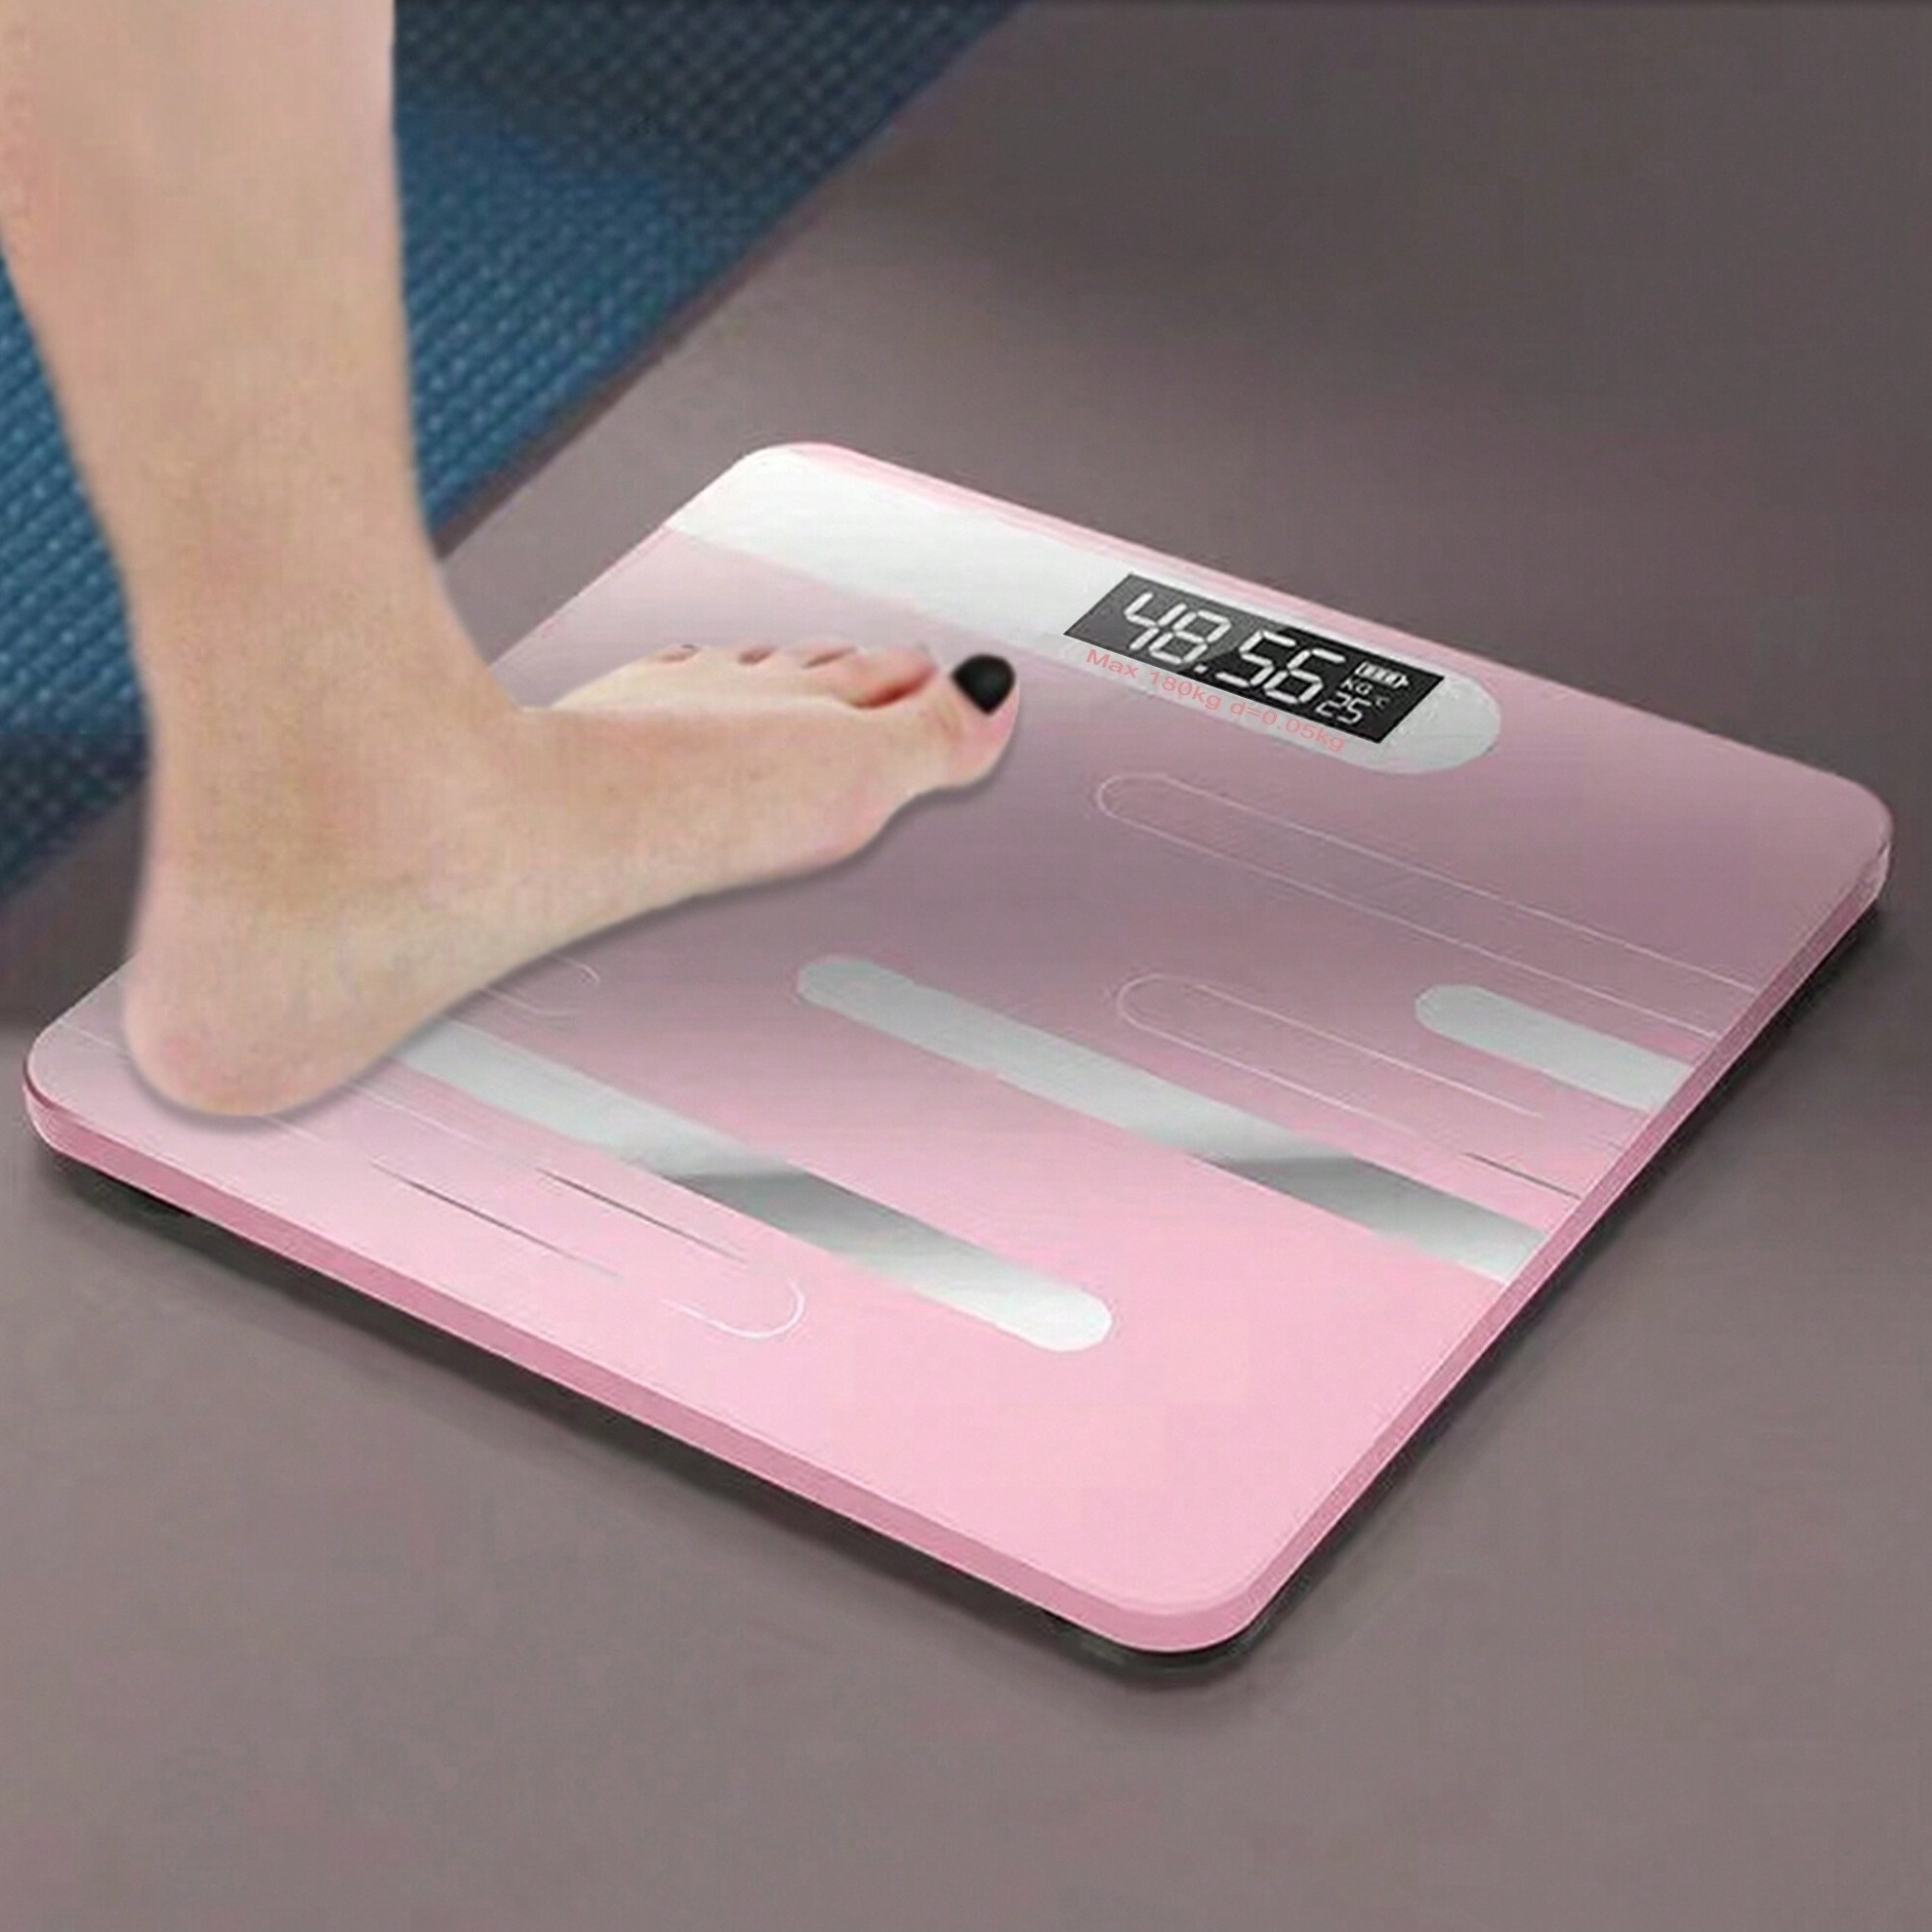 Weighing scale Bathroom Scales, Digital Electronic Smart Floor